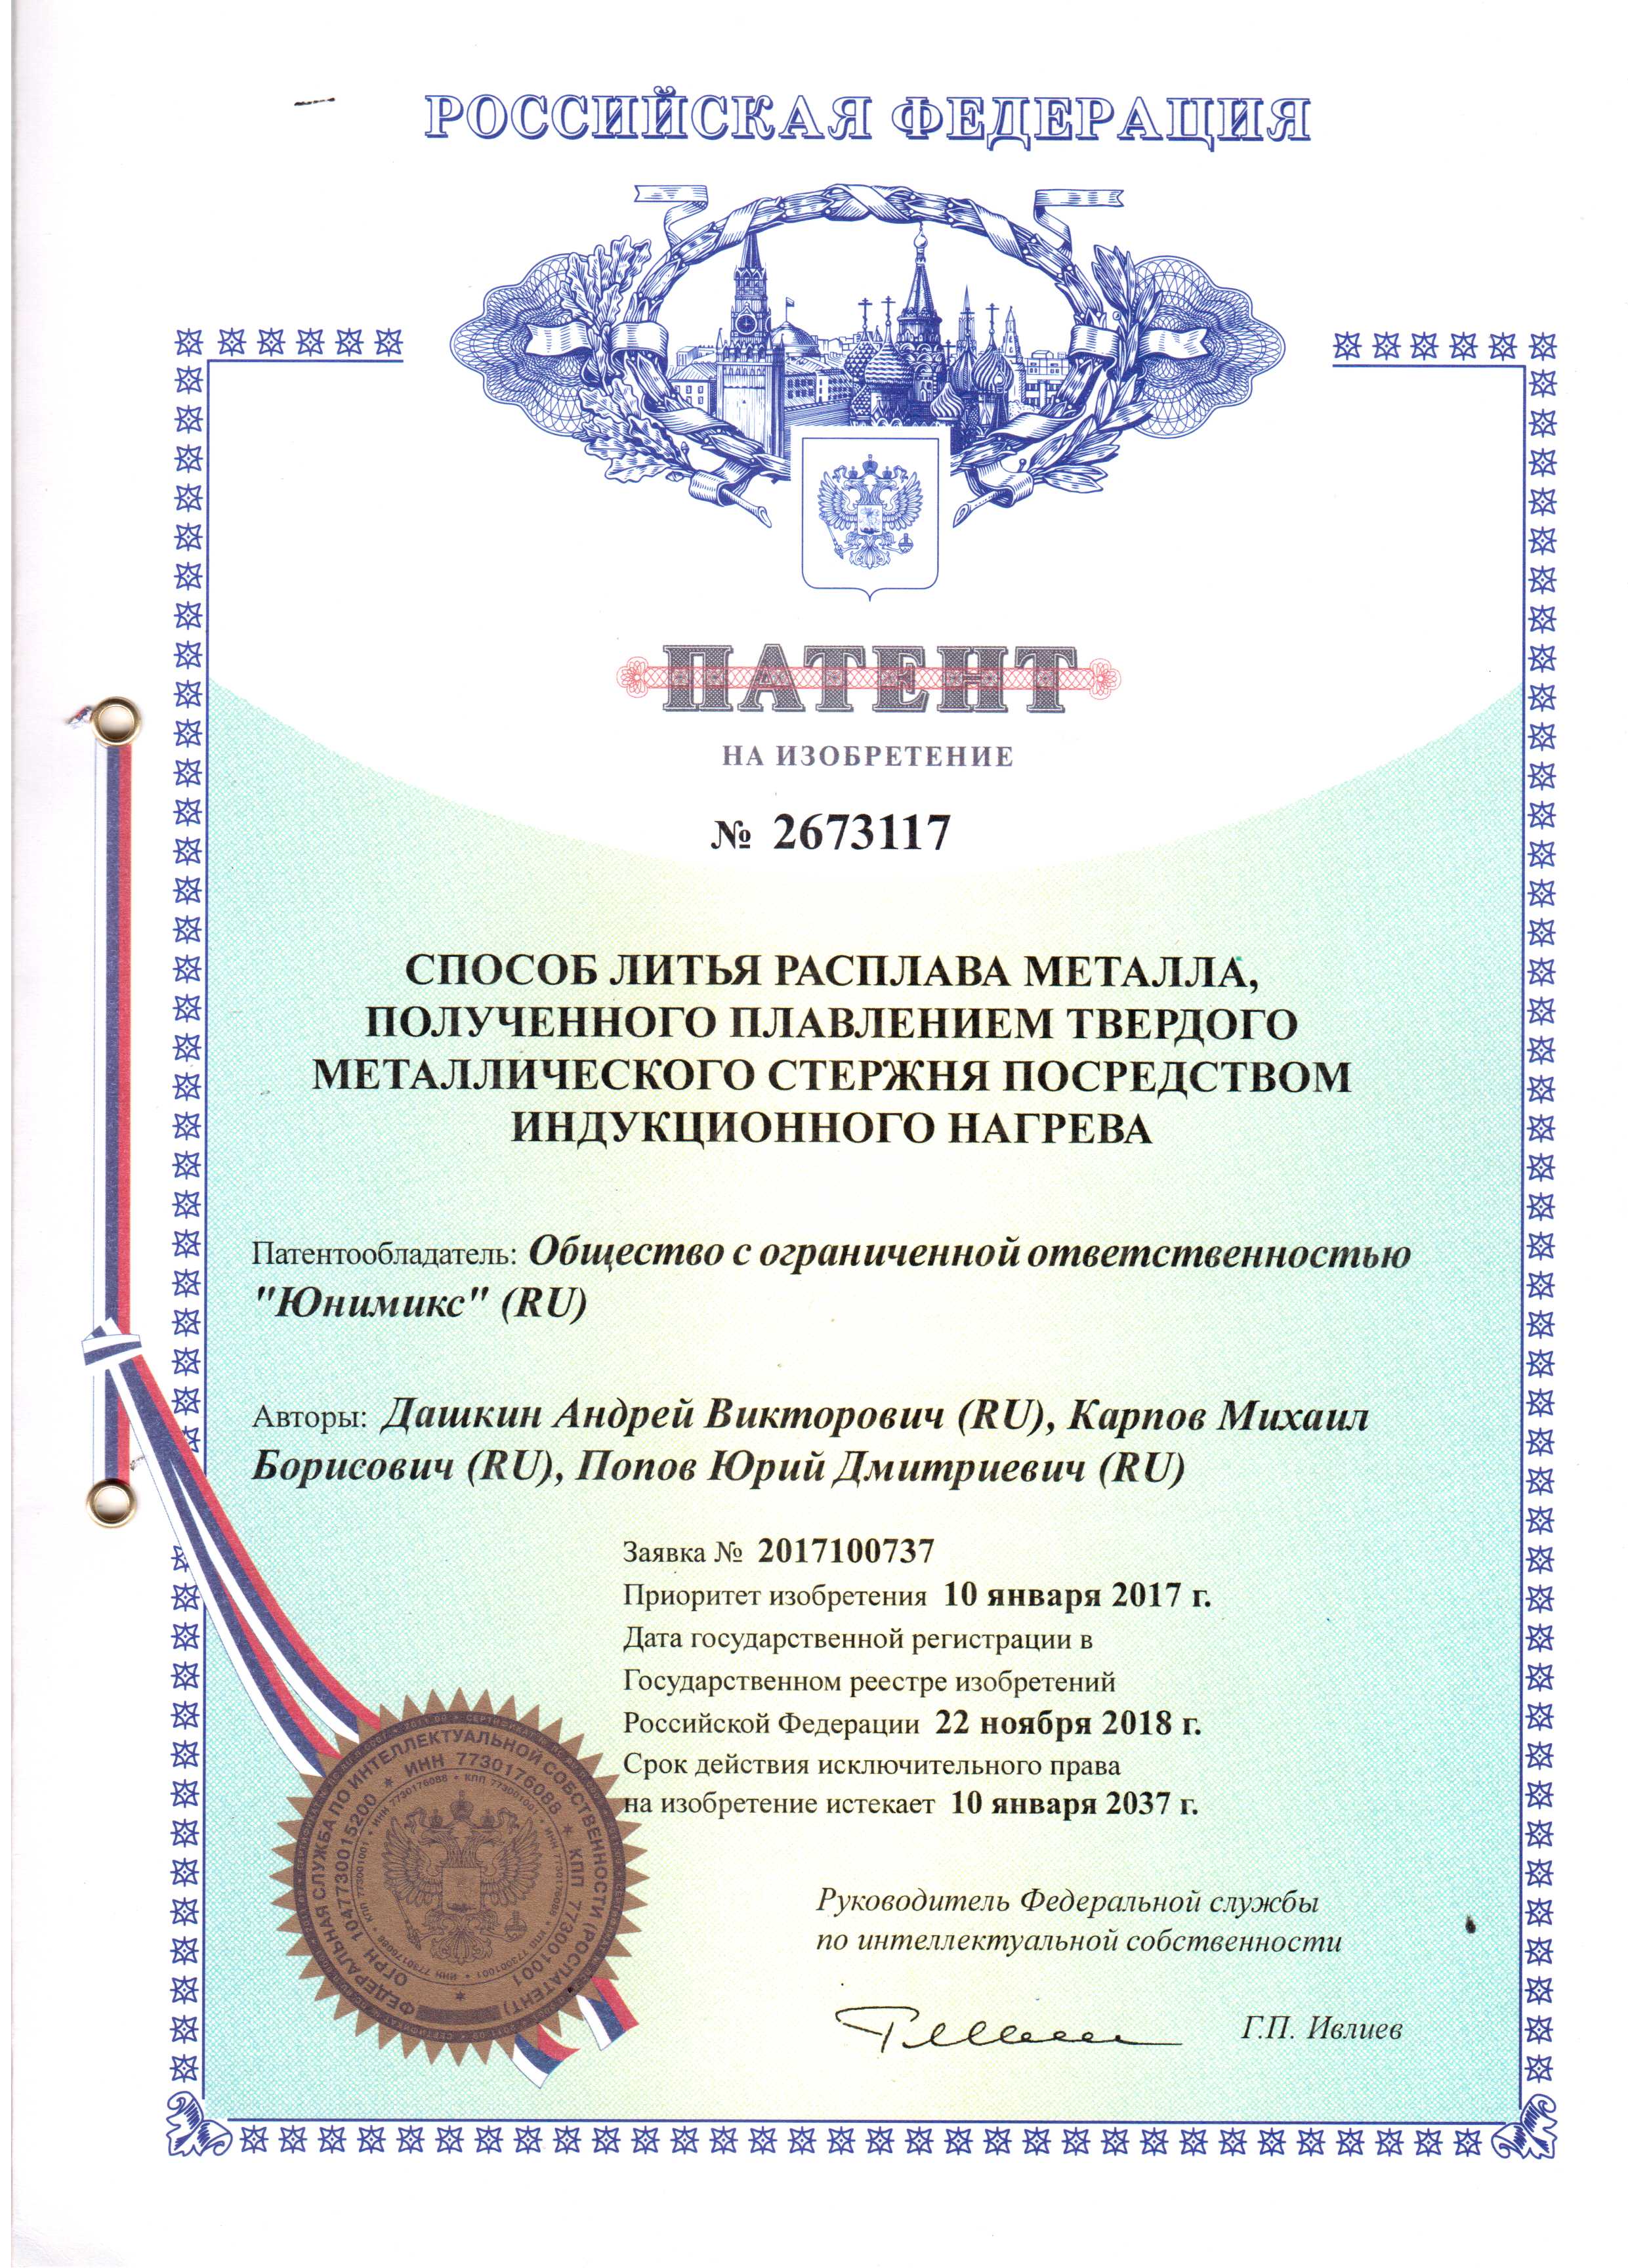 Резидент технопарка «Яблочков» получил патент